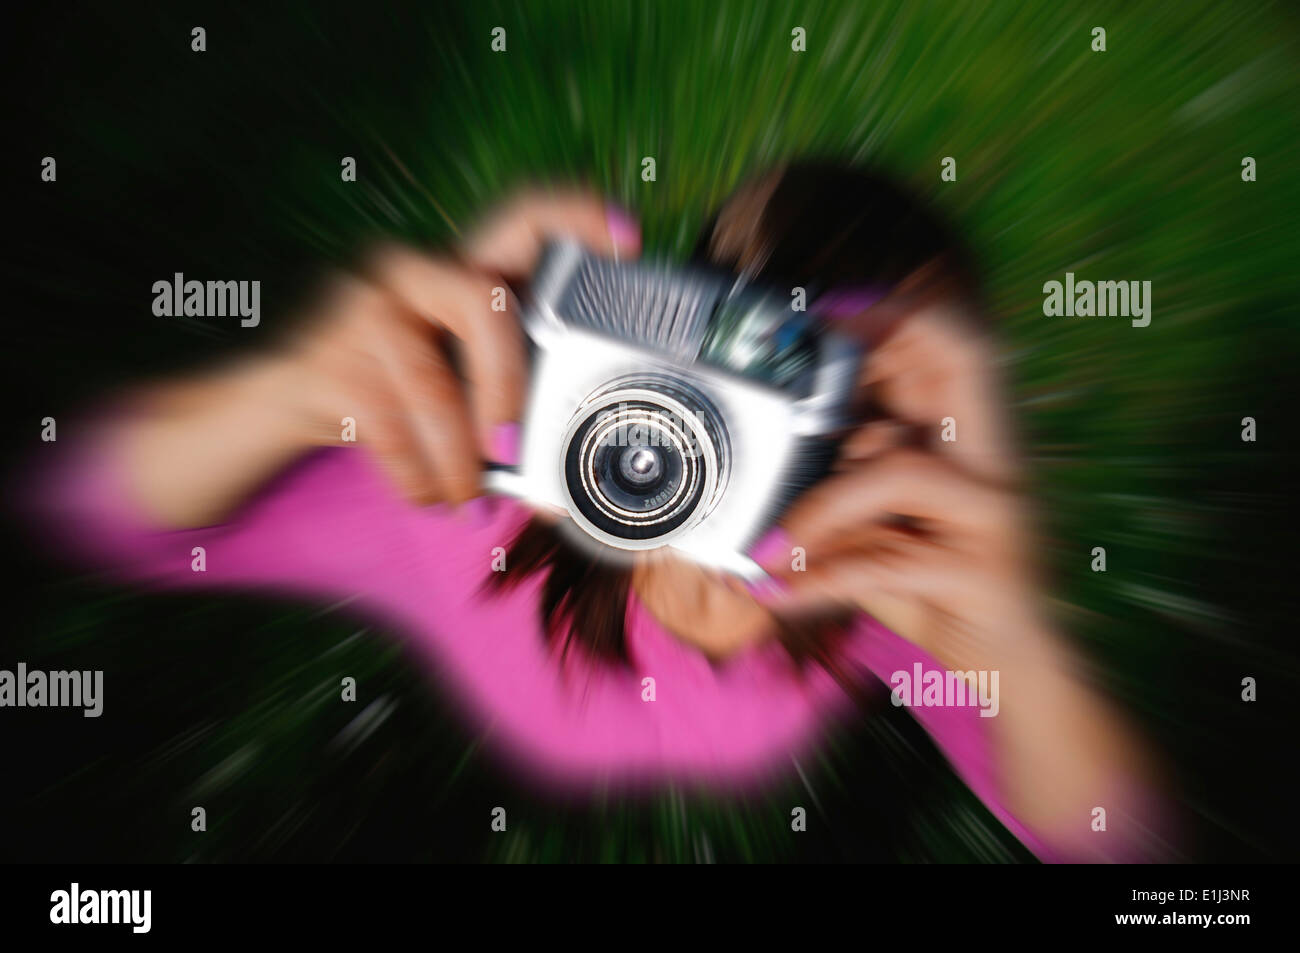 Frau mit alten Kamera, fisheye-Objektiv fotografieren Stockfoto